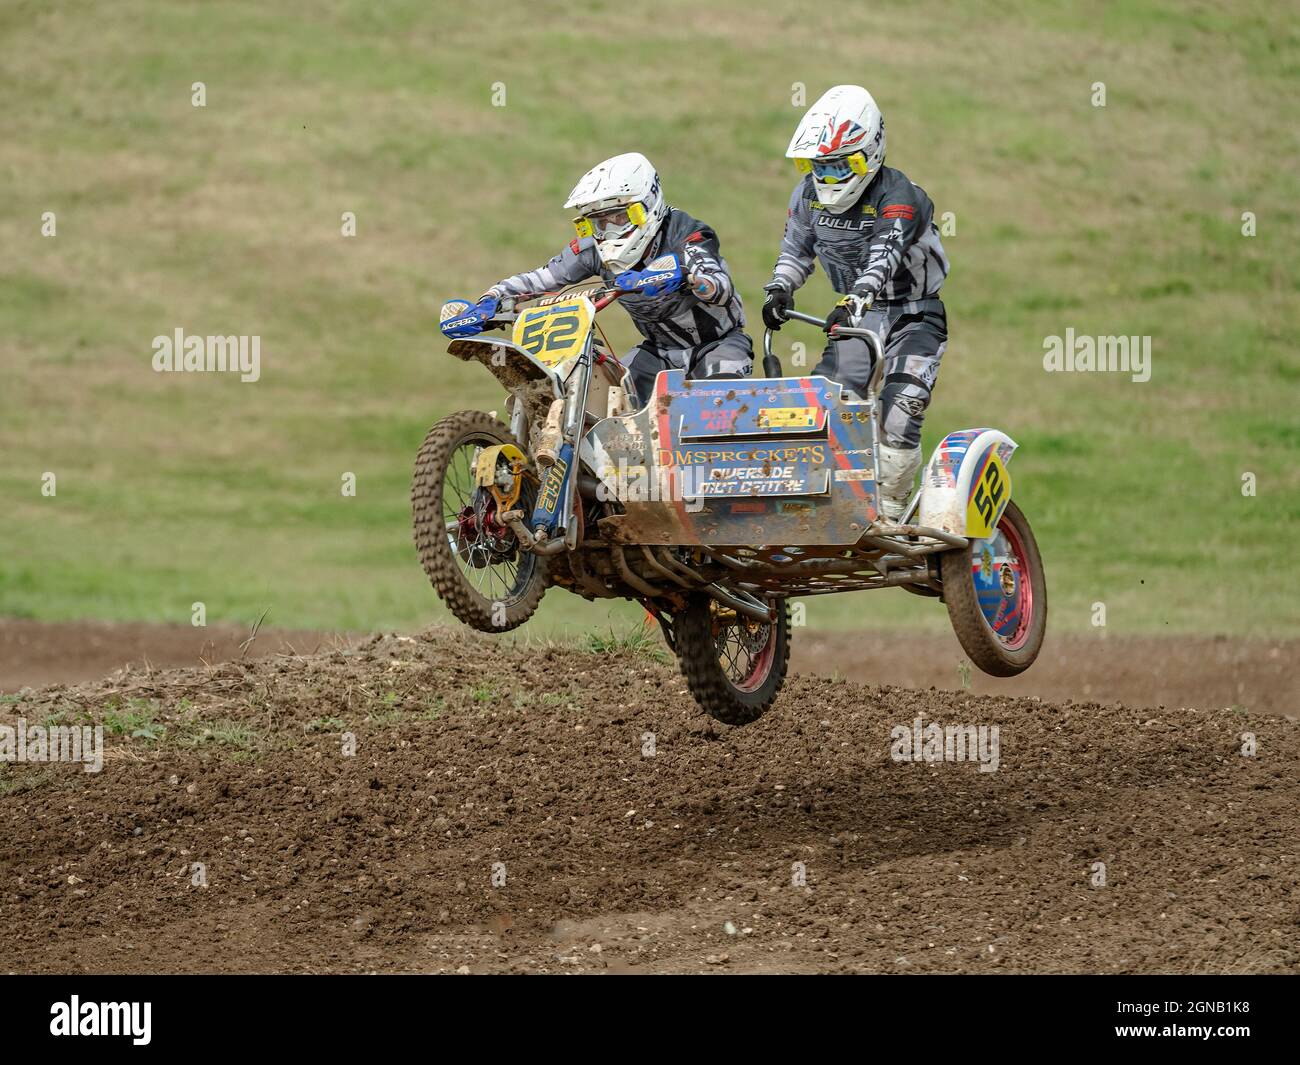 Sidecar Motocross Racing Stockfotos und -bilder Kaufen - Alamy